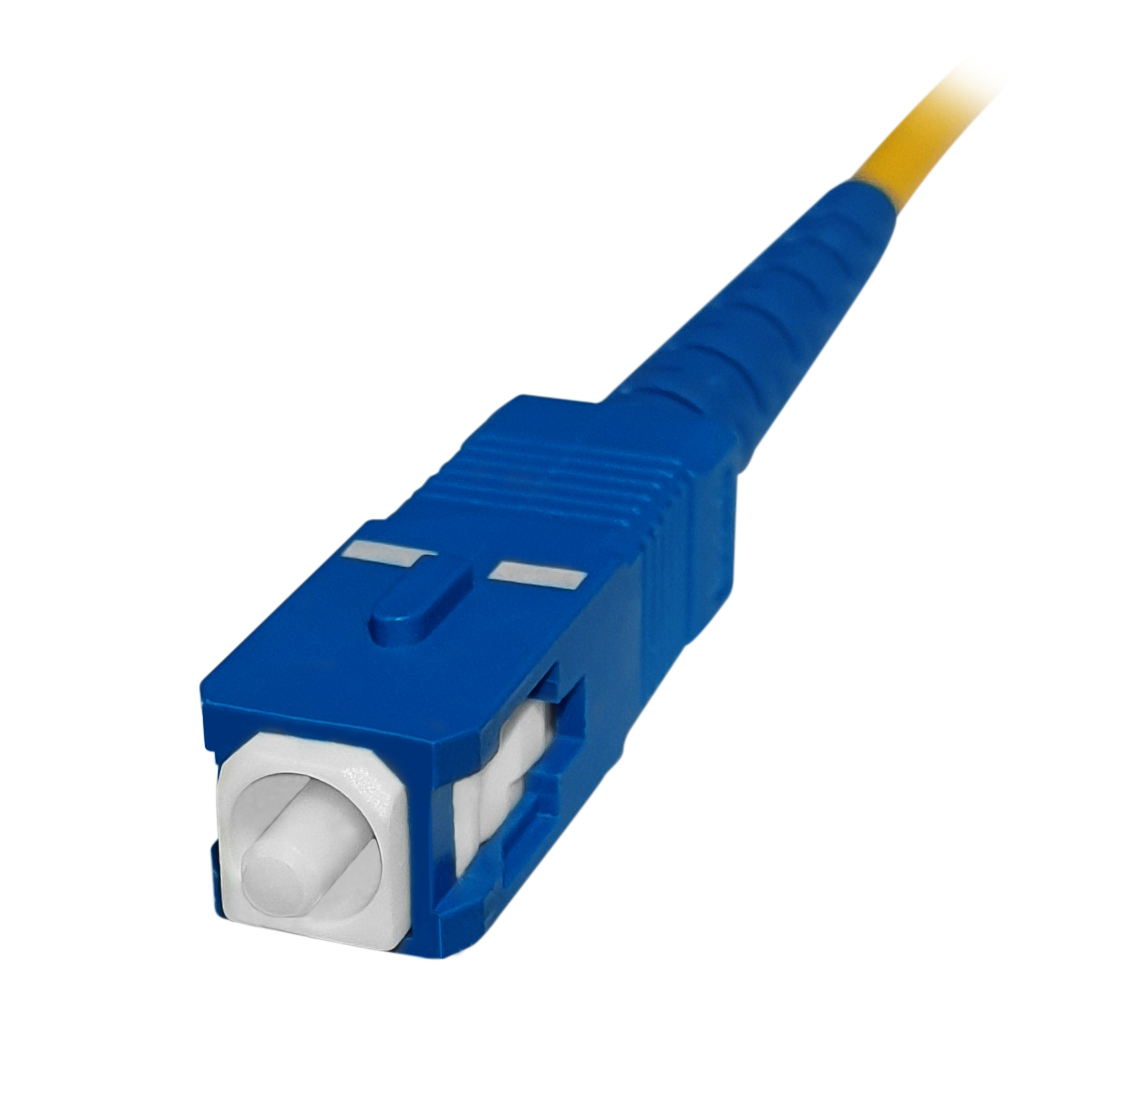 SC/UPC Fiber Optic Patch Cord